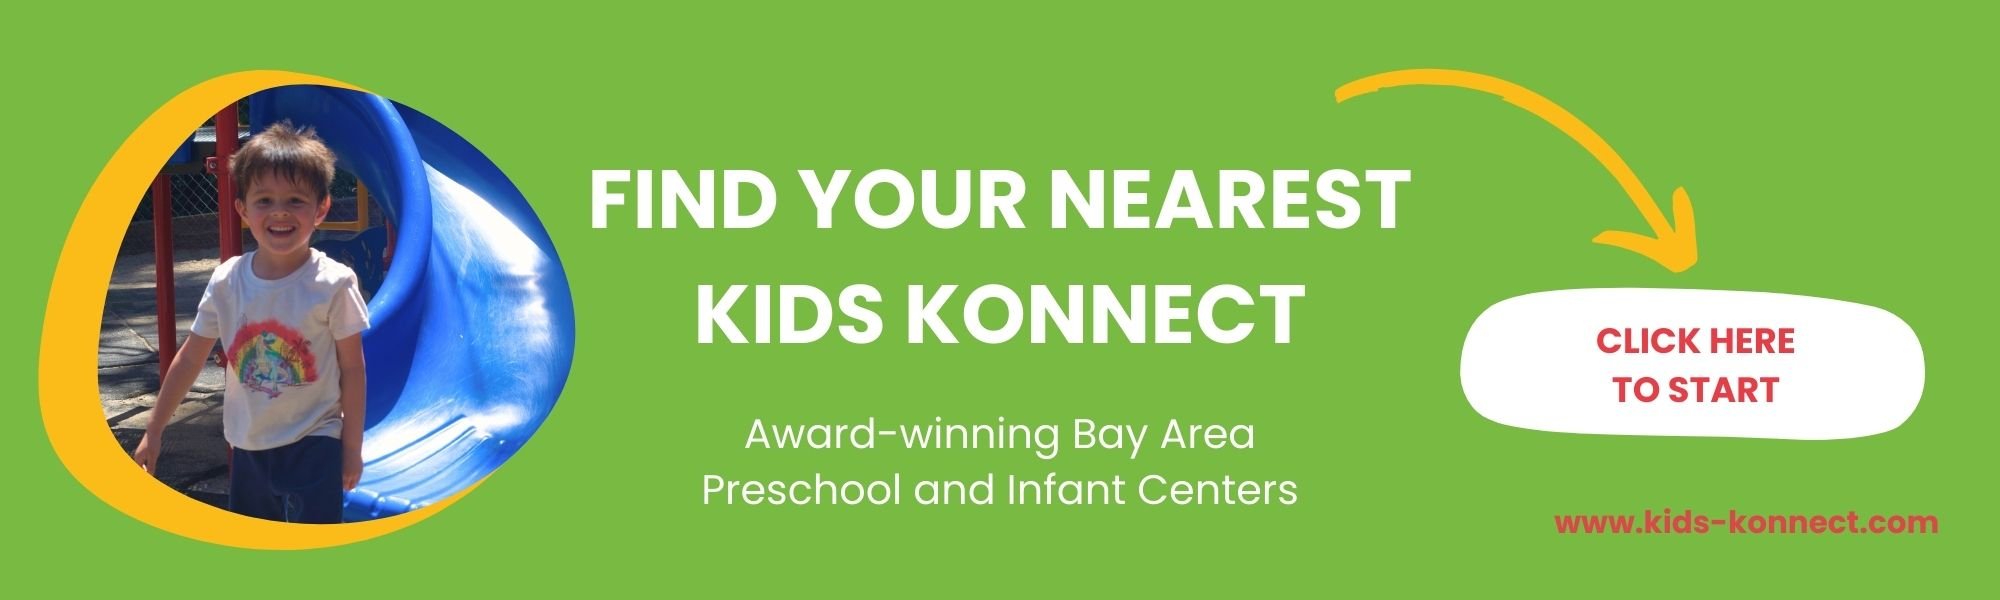 Find your nearest Kids Konnect